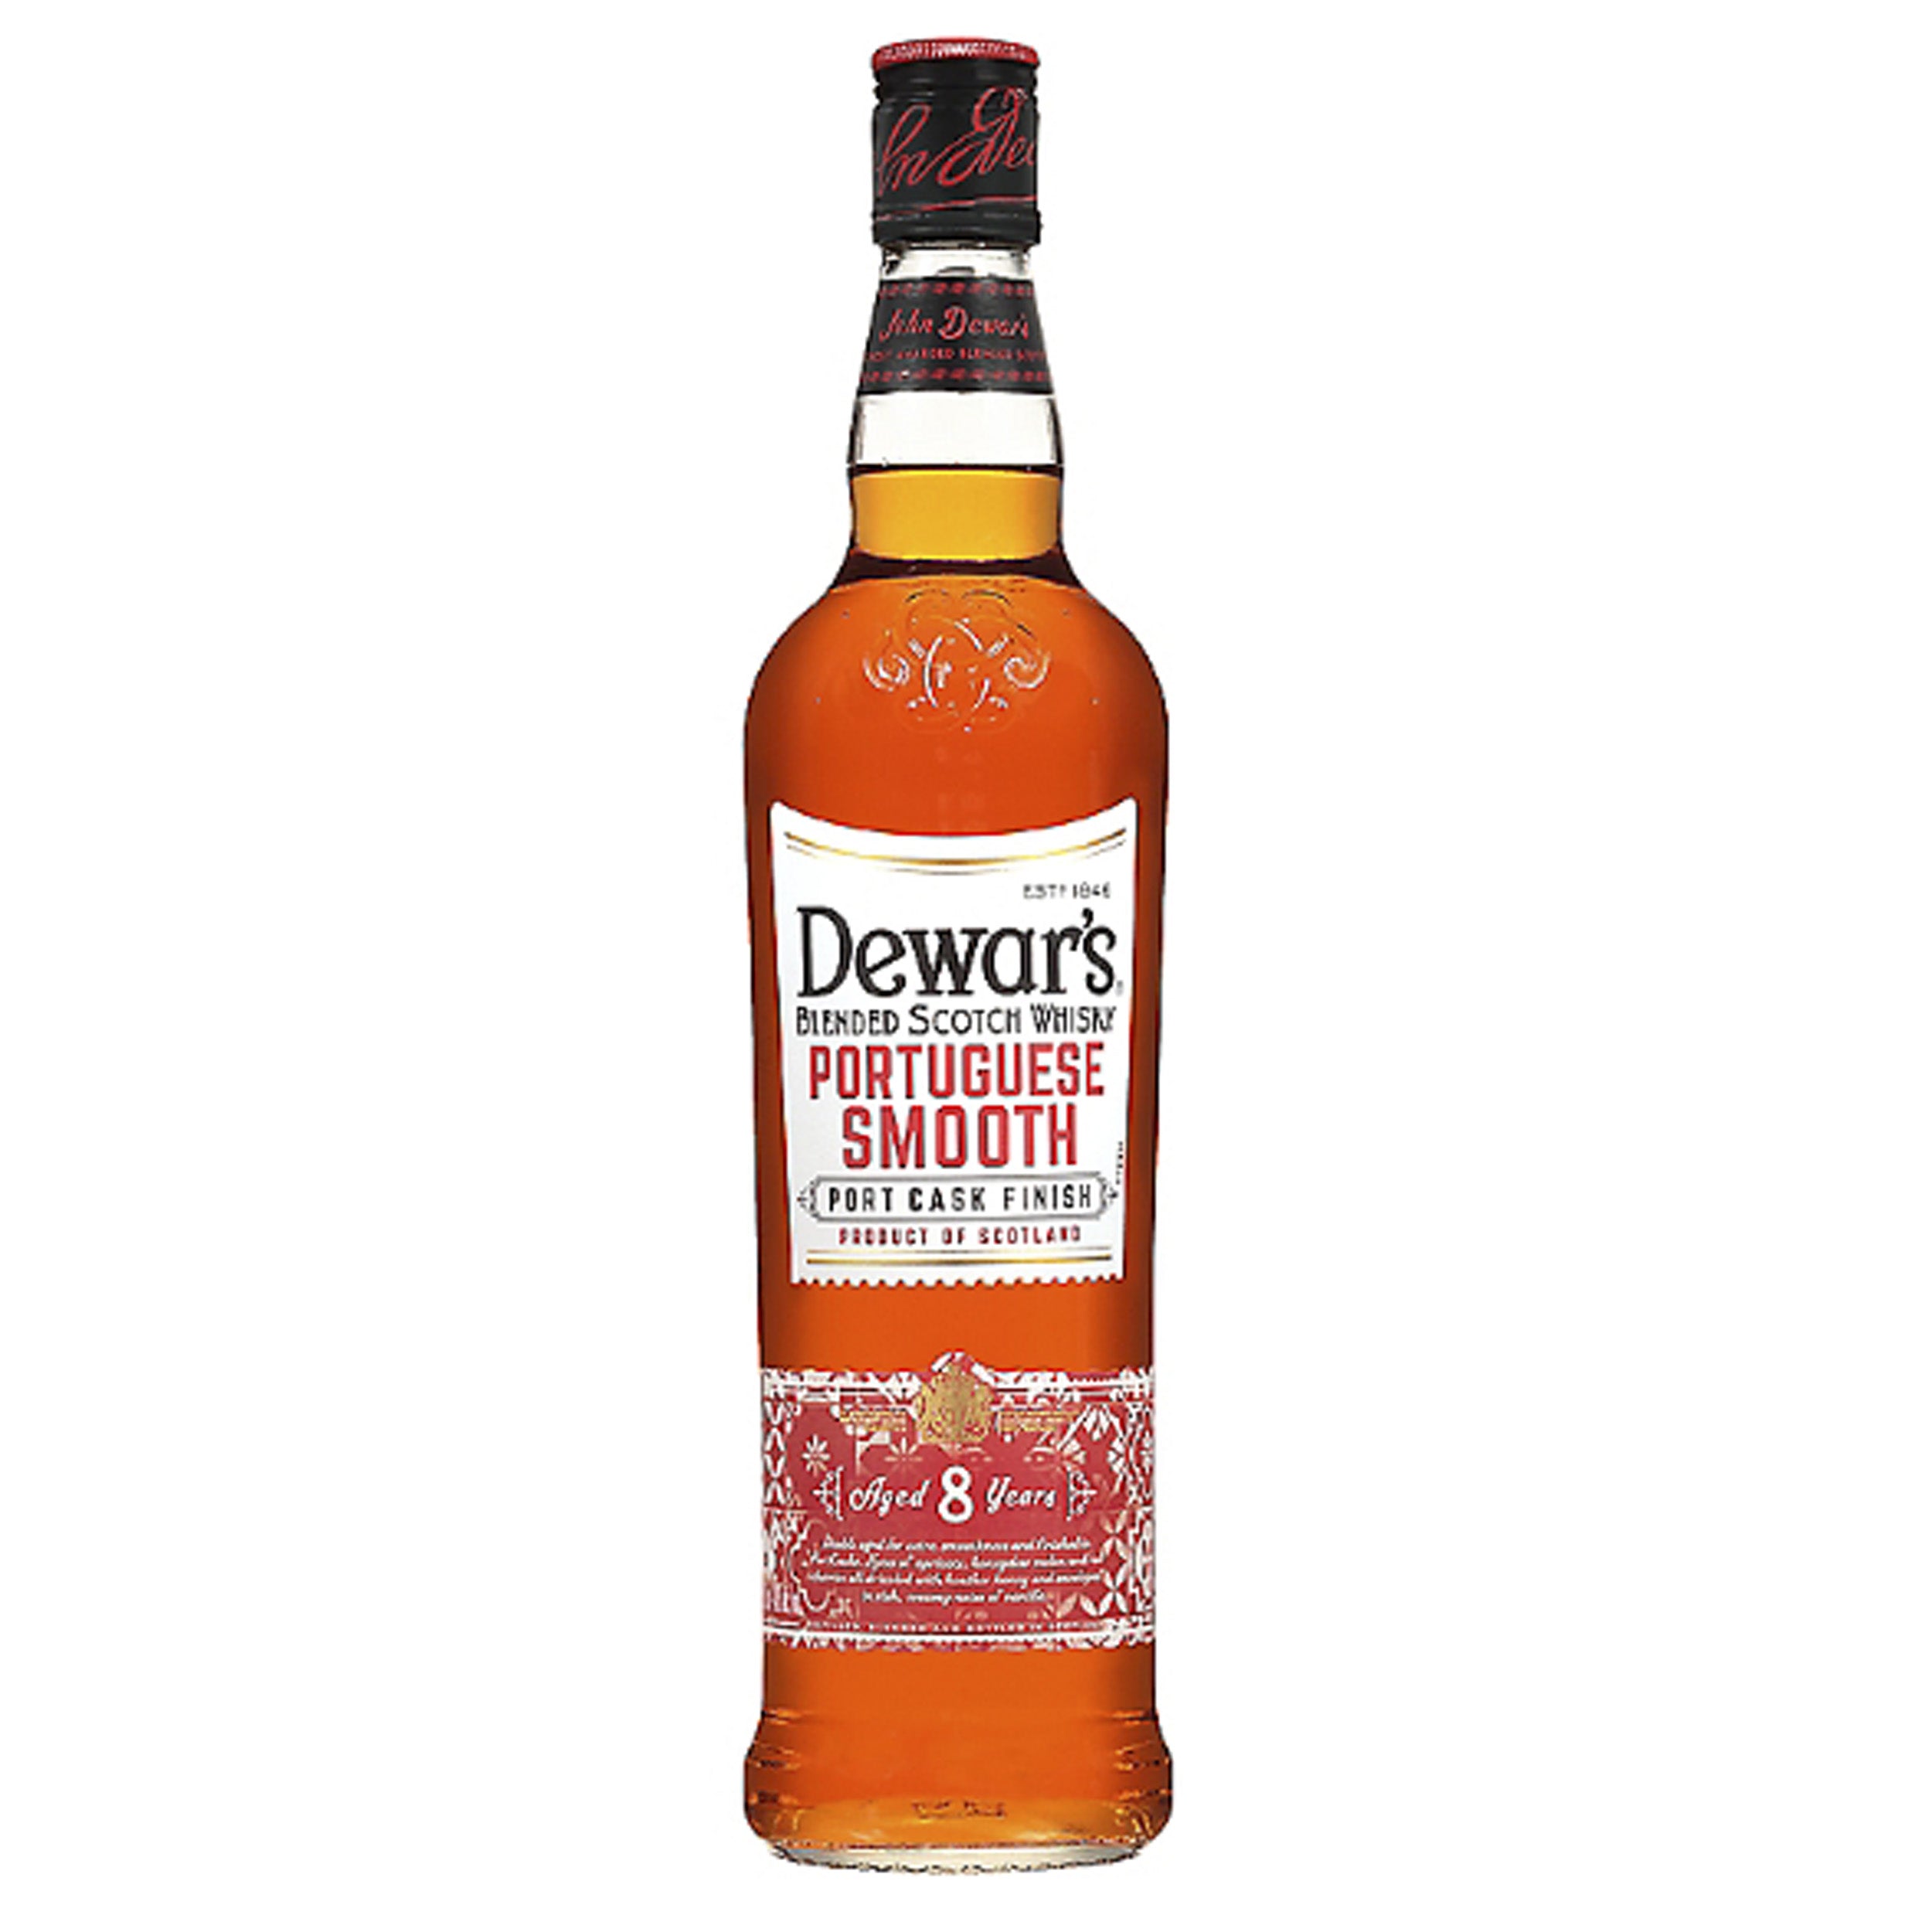 Dewar's Portuguese Smooth Blended Scotch Whisky